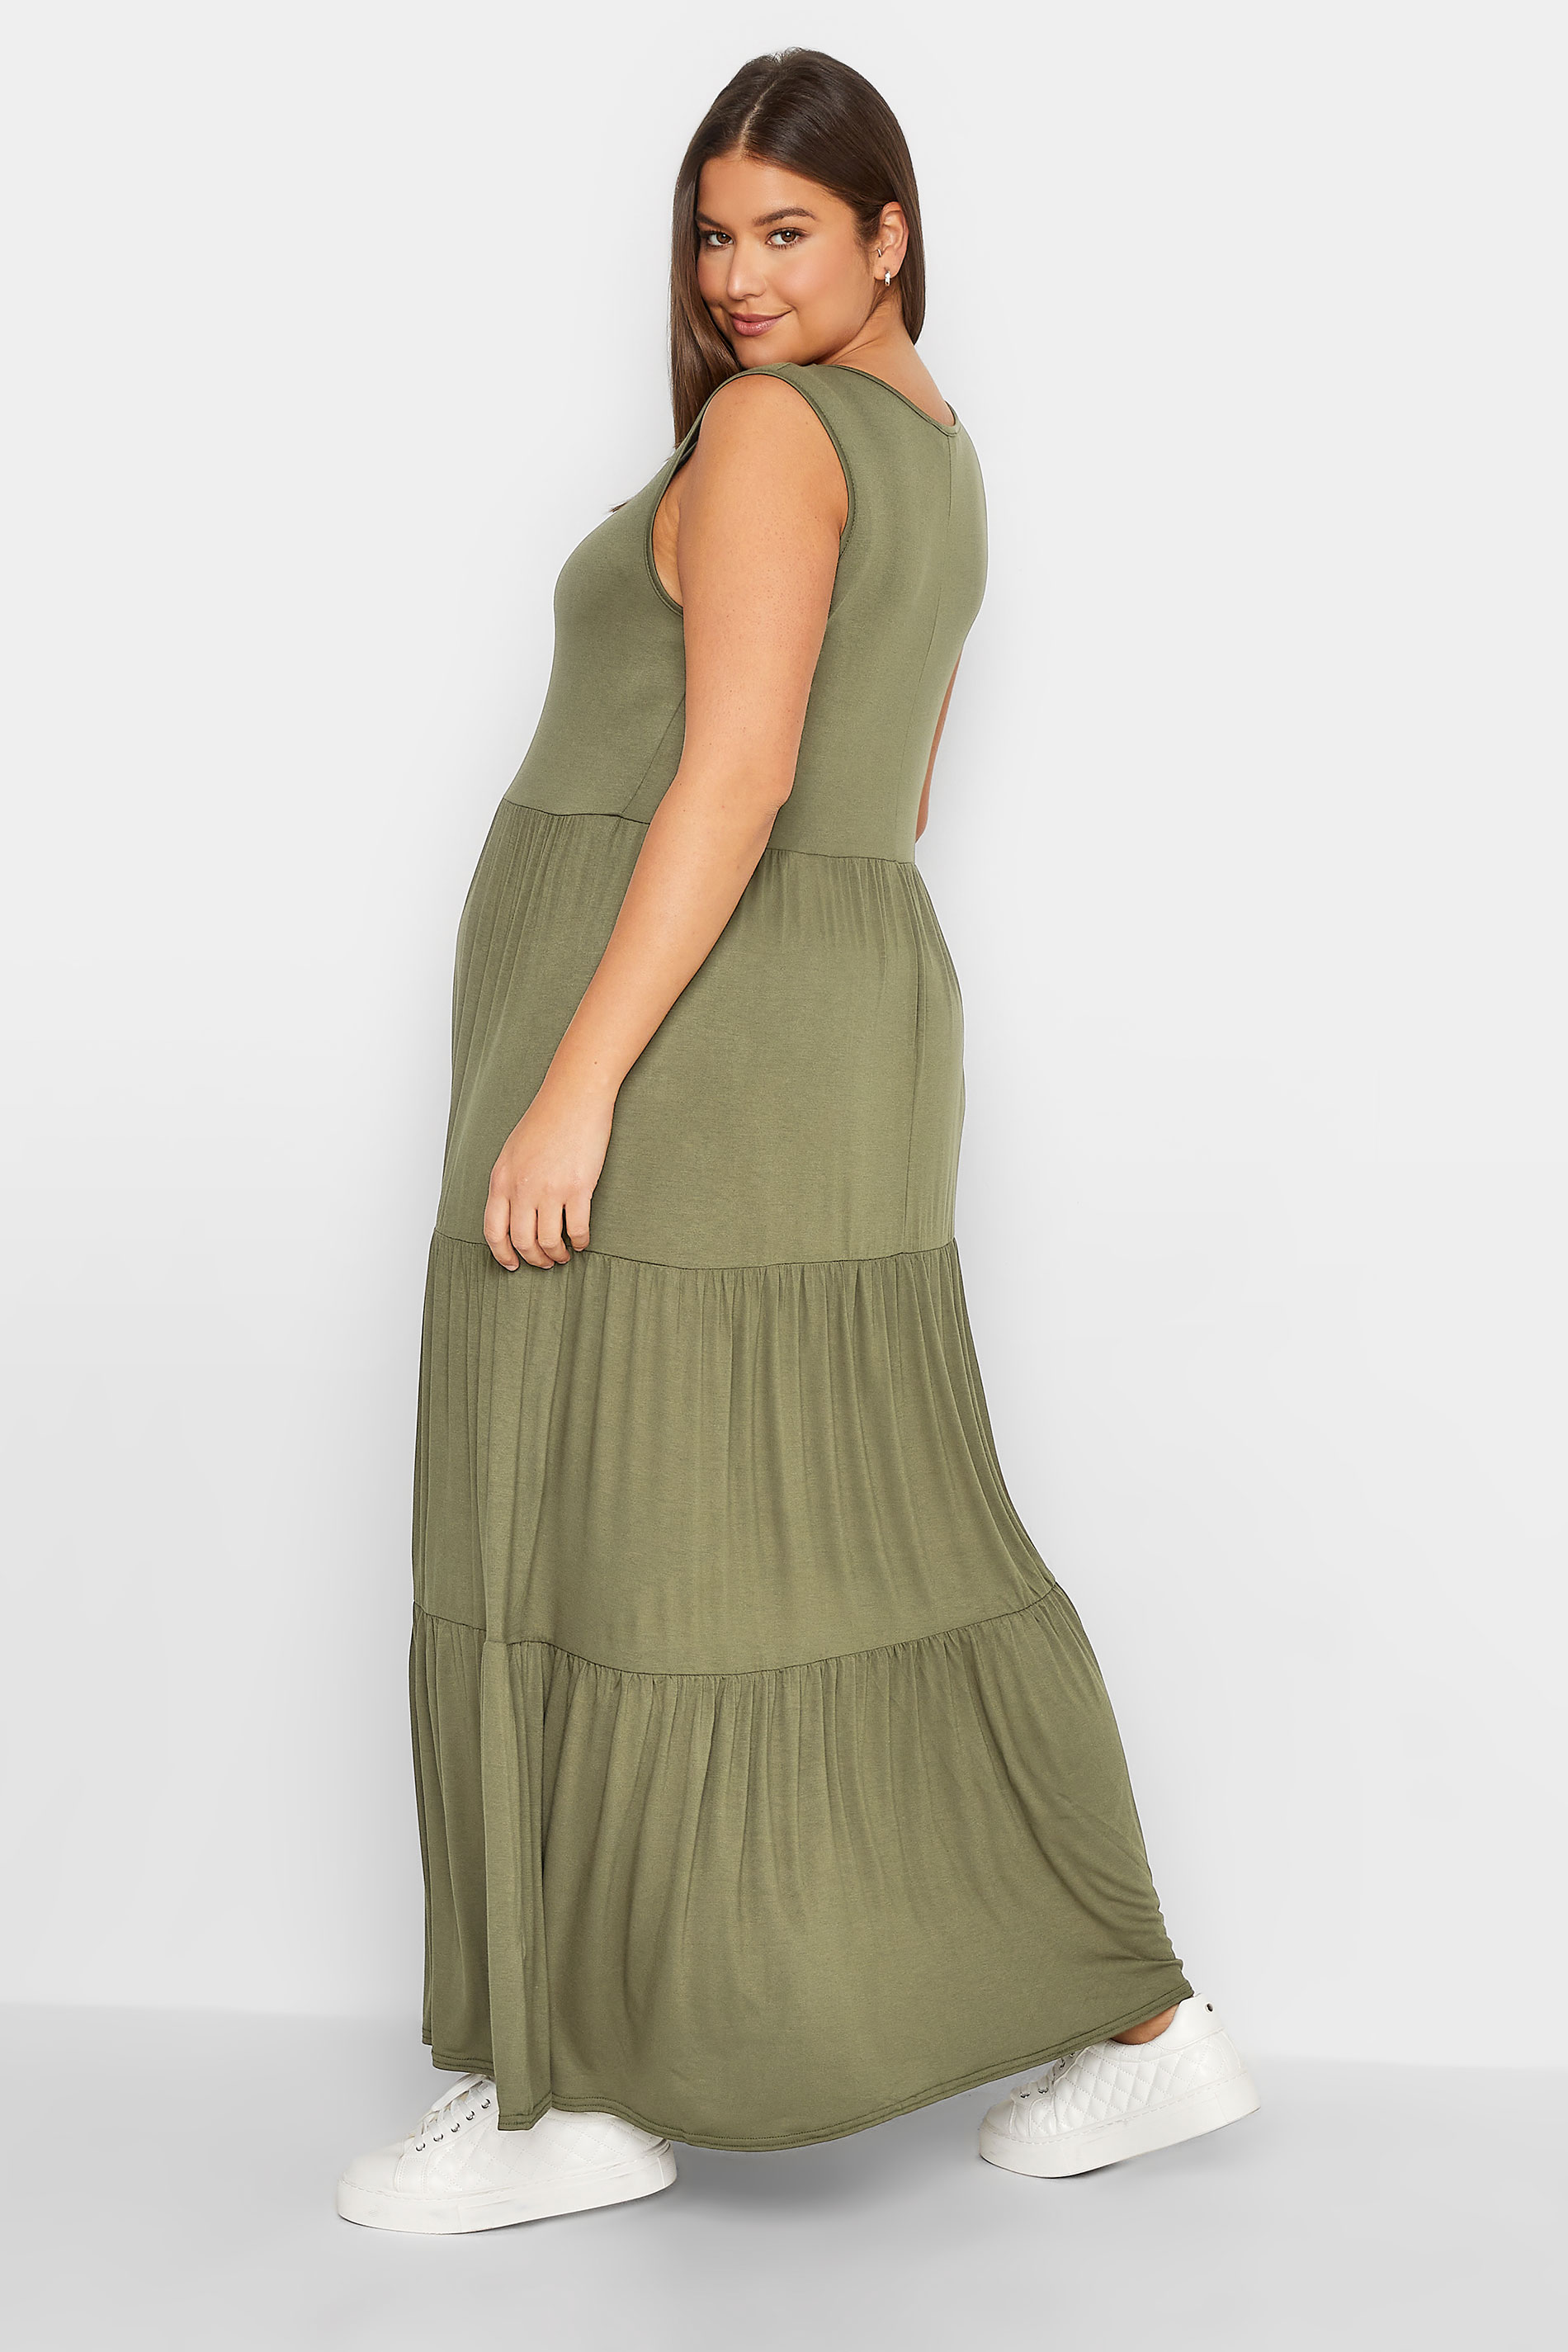 LTS Maternity Khaki Green Tiered Maxi Dress | Long Tall Sally 3